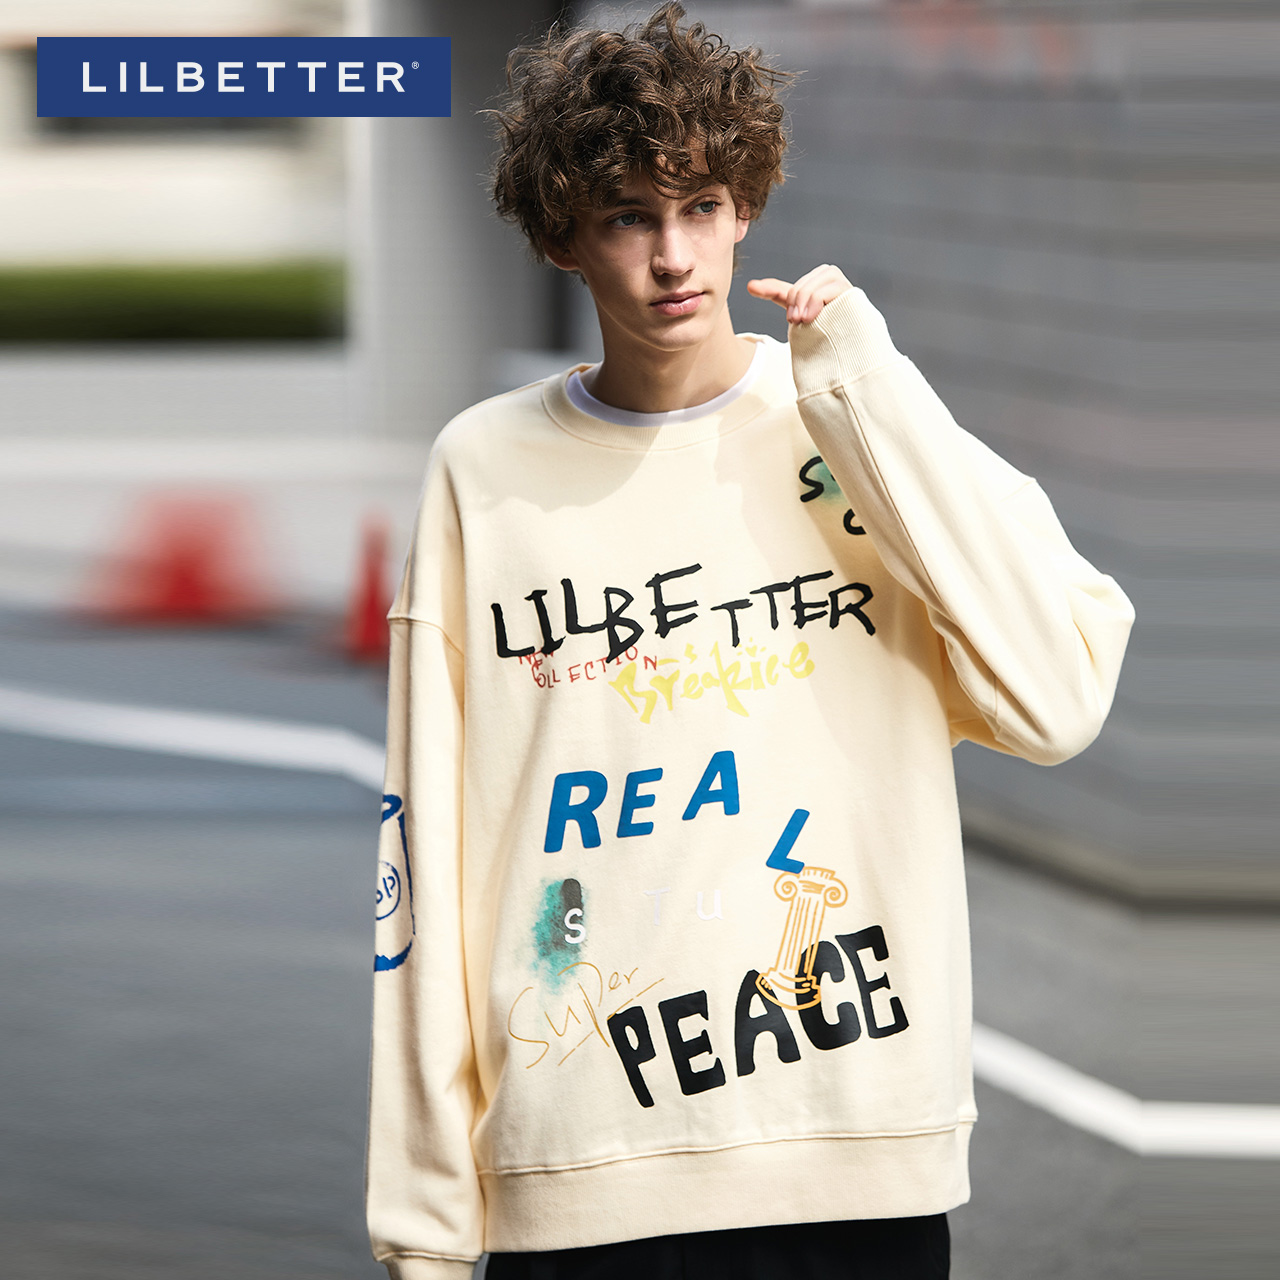 Lilbetter男士卫衣潮牌嘻哈宽松套头衫涂鸦印花秋装衣服帅气上衣,降价幅度41.1%